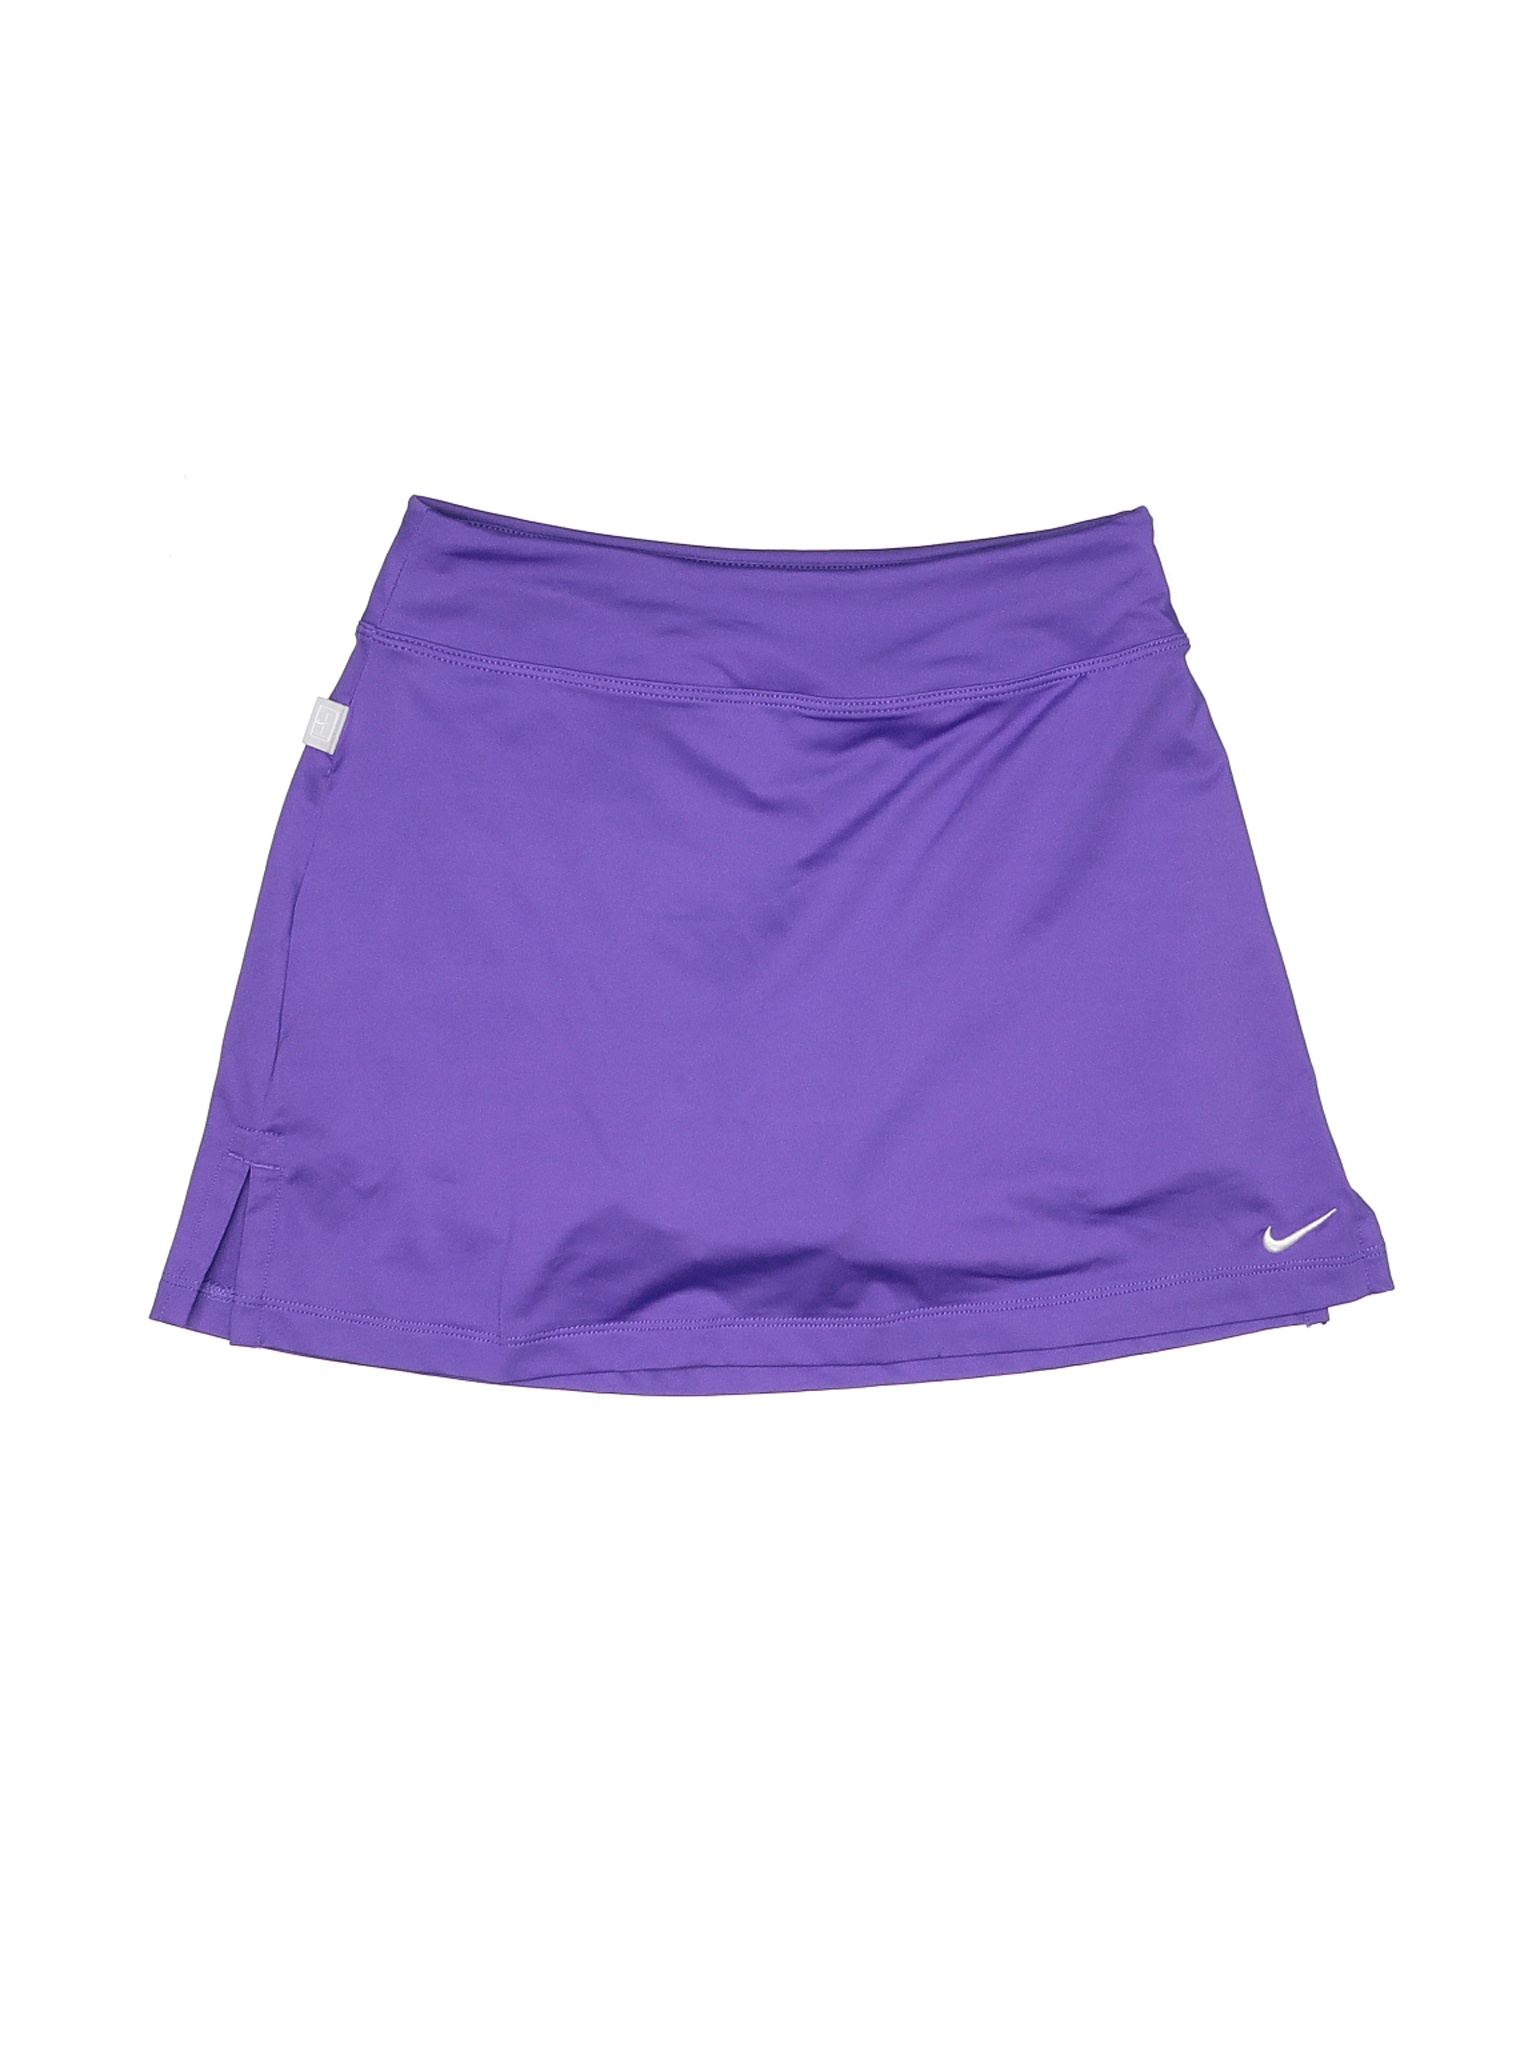 Nike Women Purple Active Skort XS | eBay